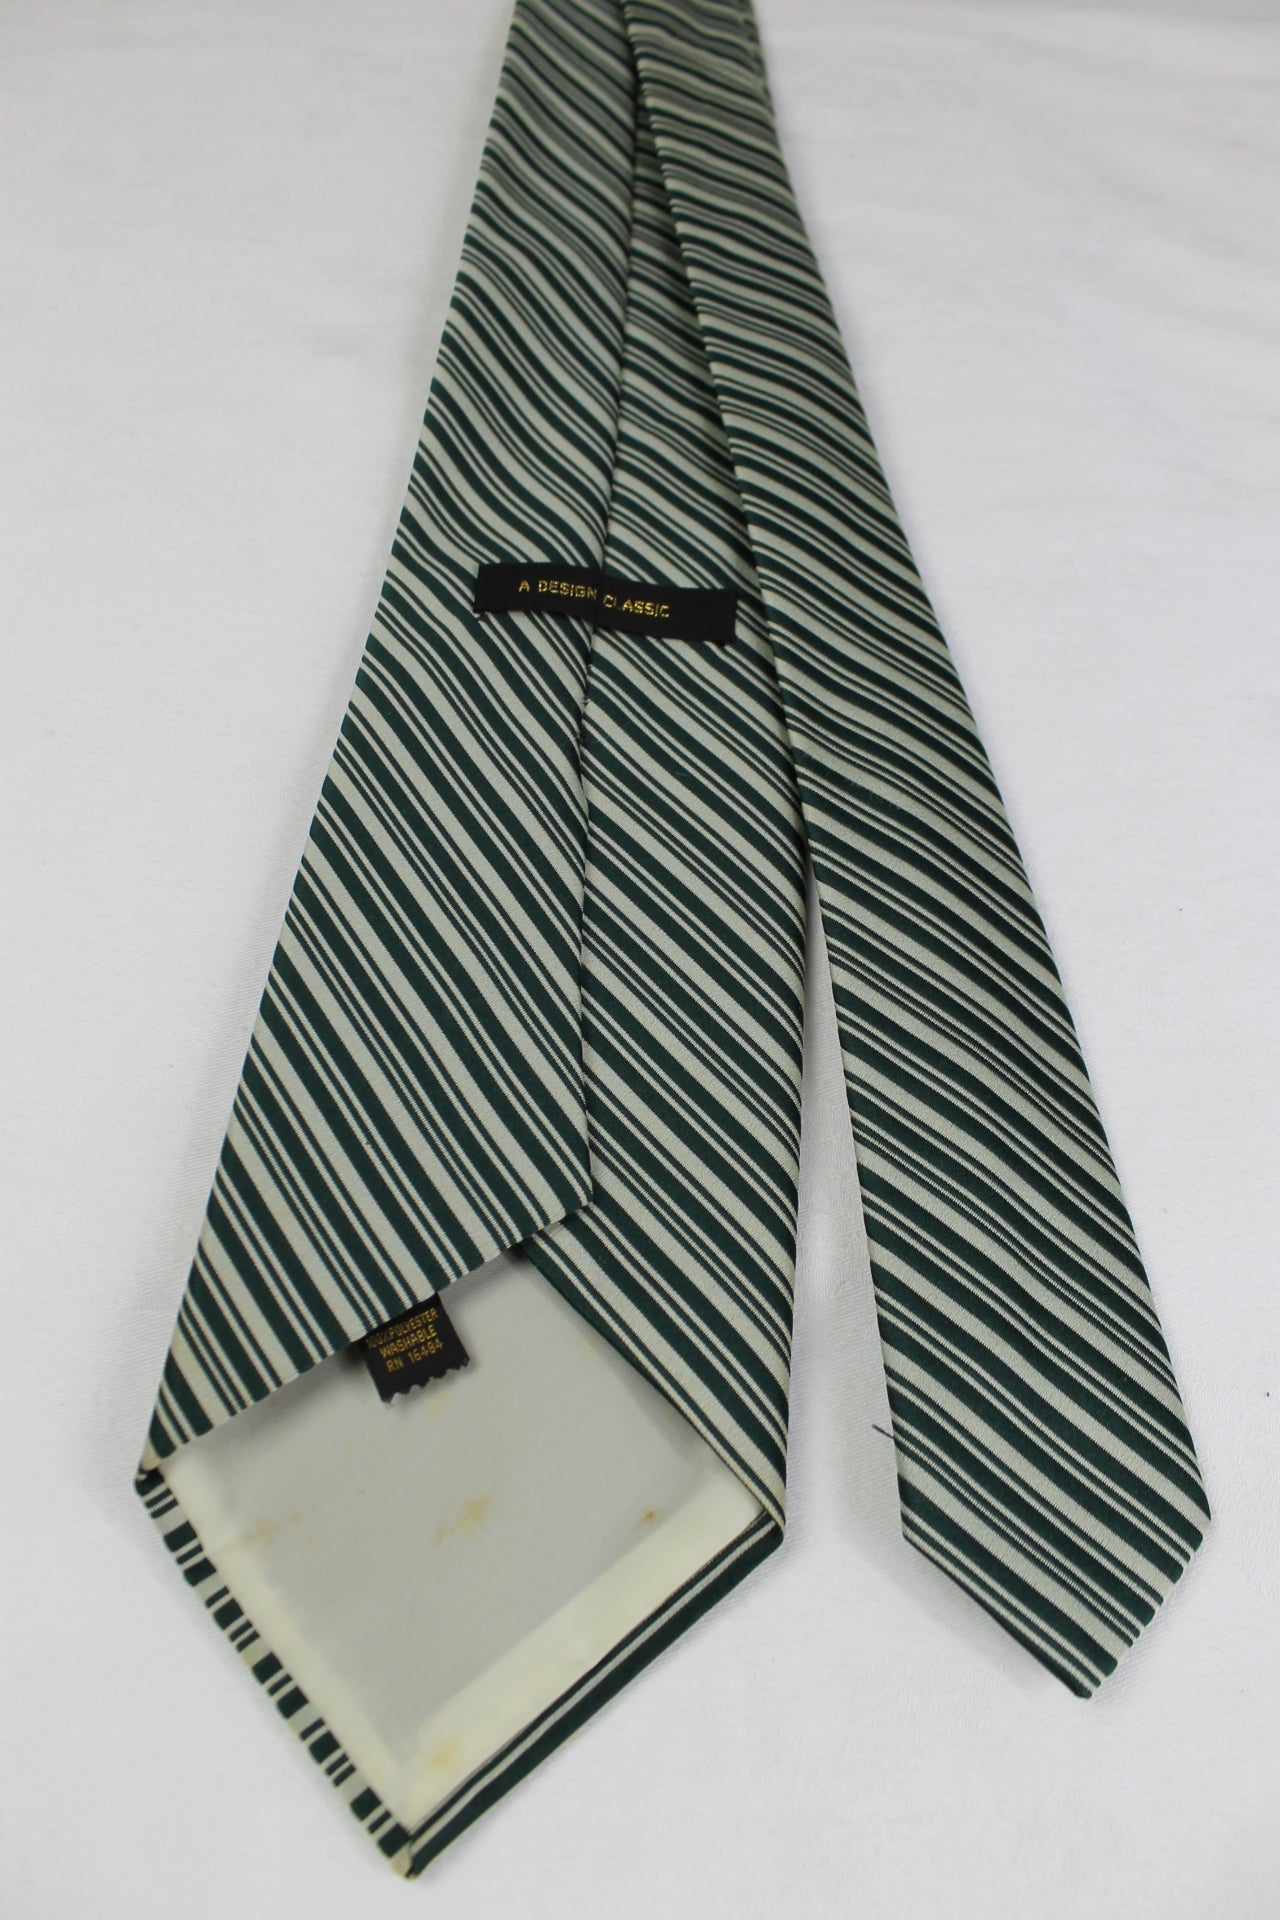 Vintage Towncraft Green Ivory Stripe Kipper Tie 1970s